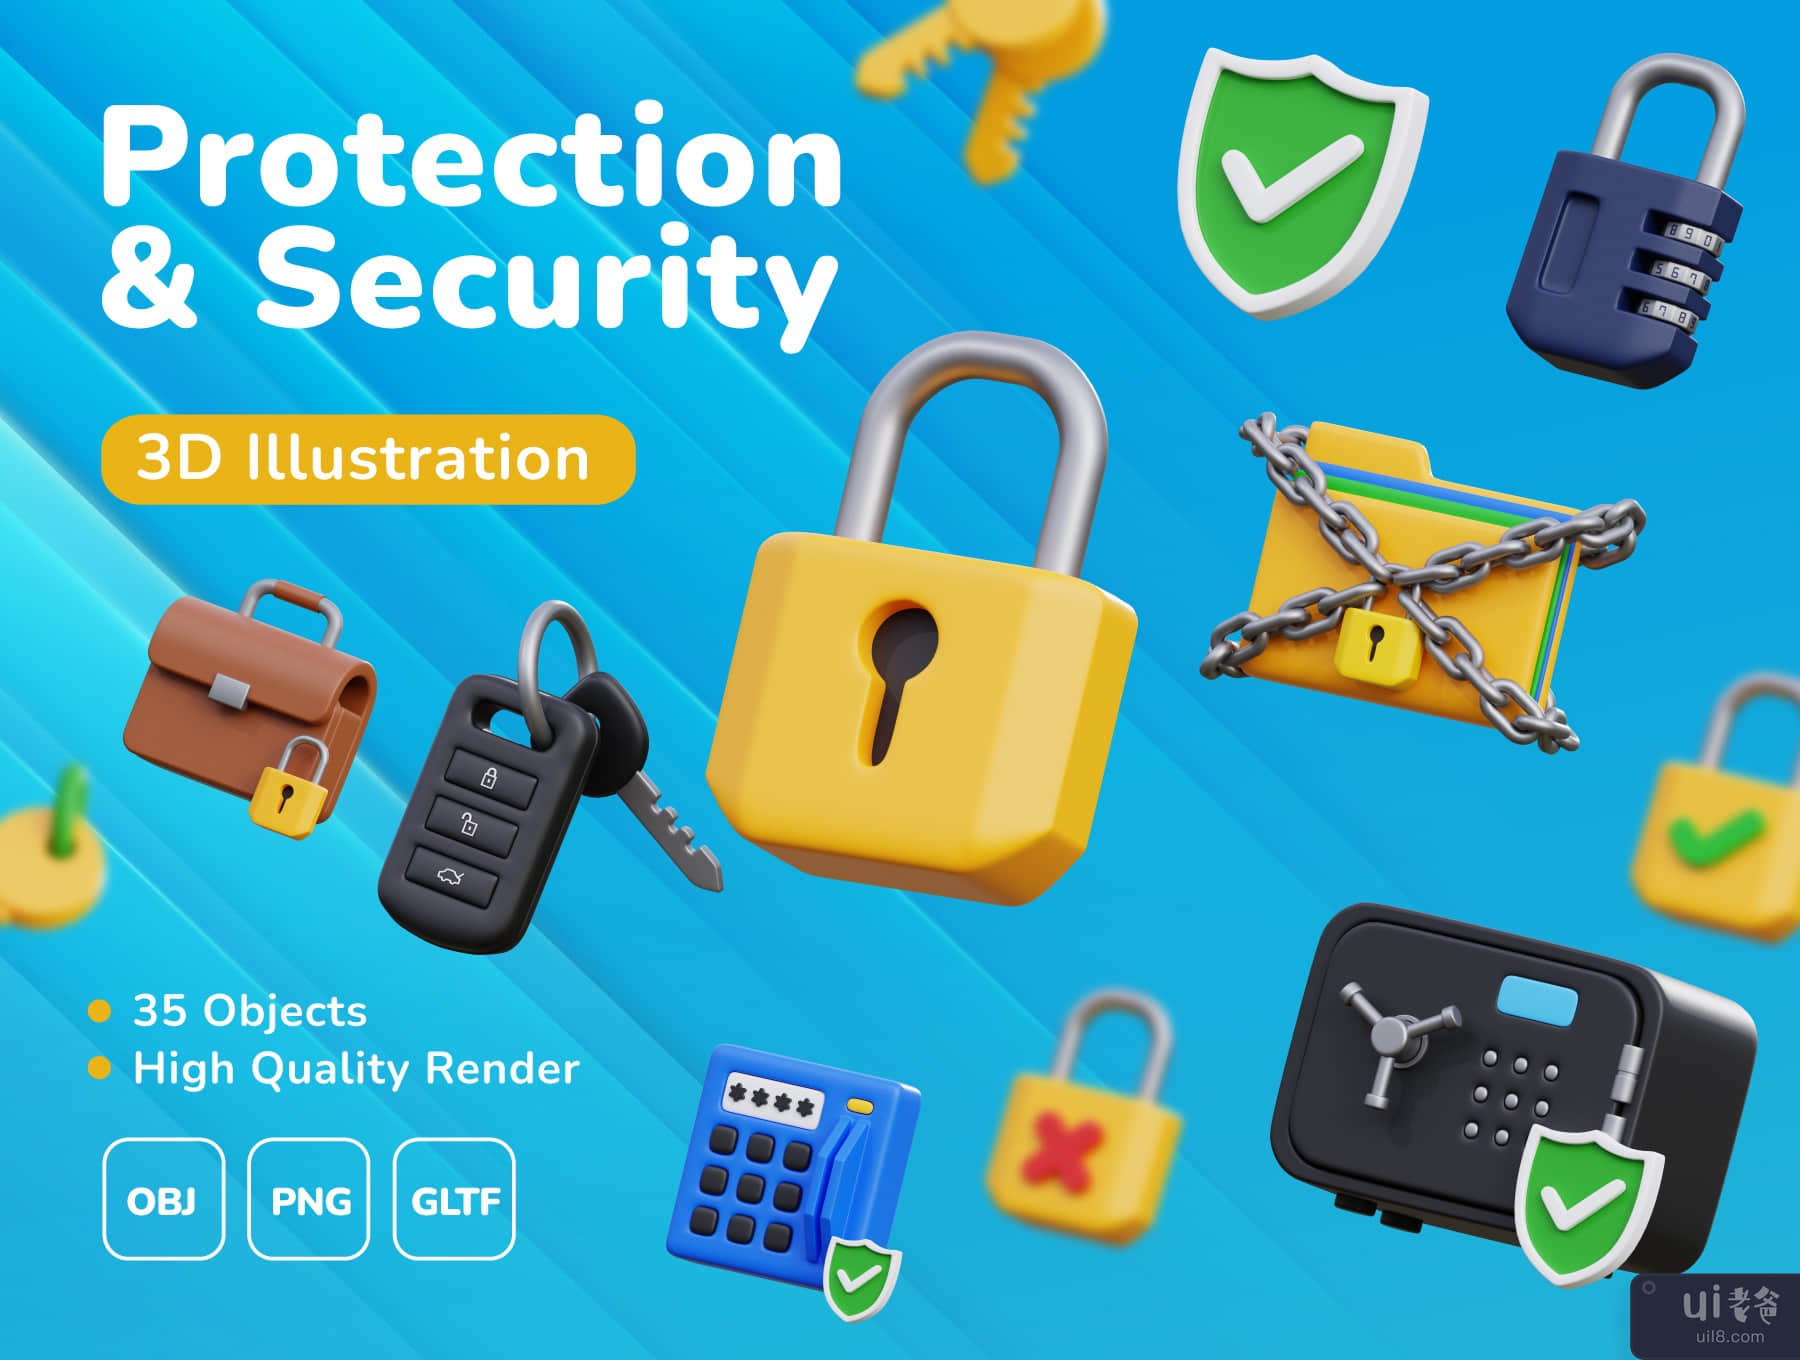 保护与安全 3D 图标集 (Protection & Security 3D Icon Set)插图5